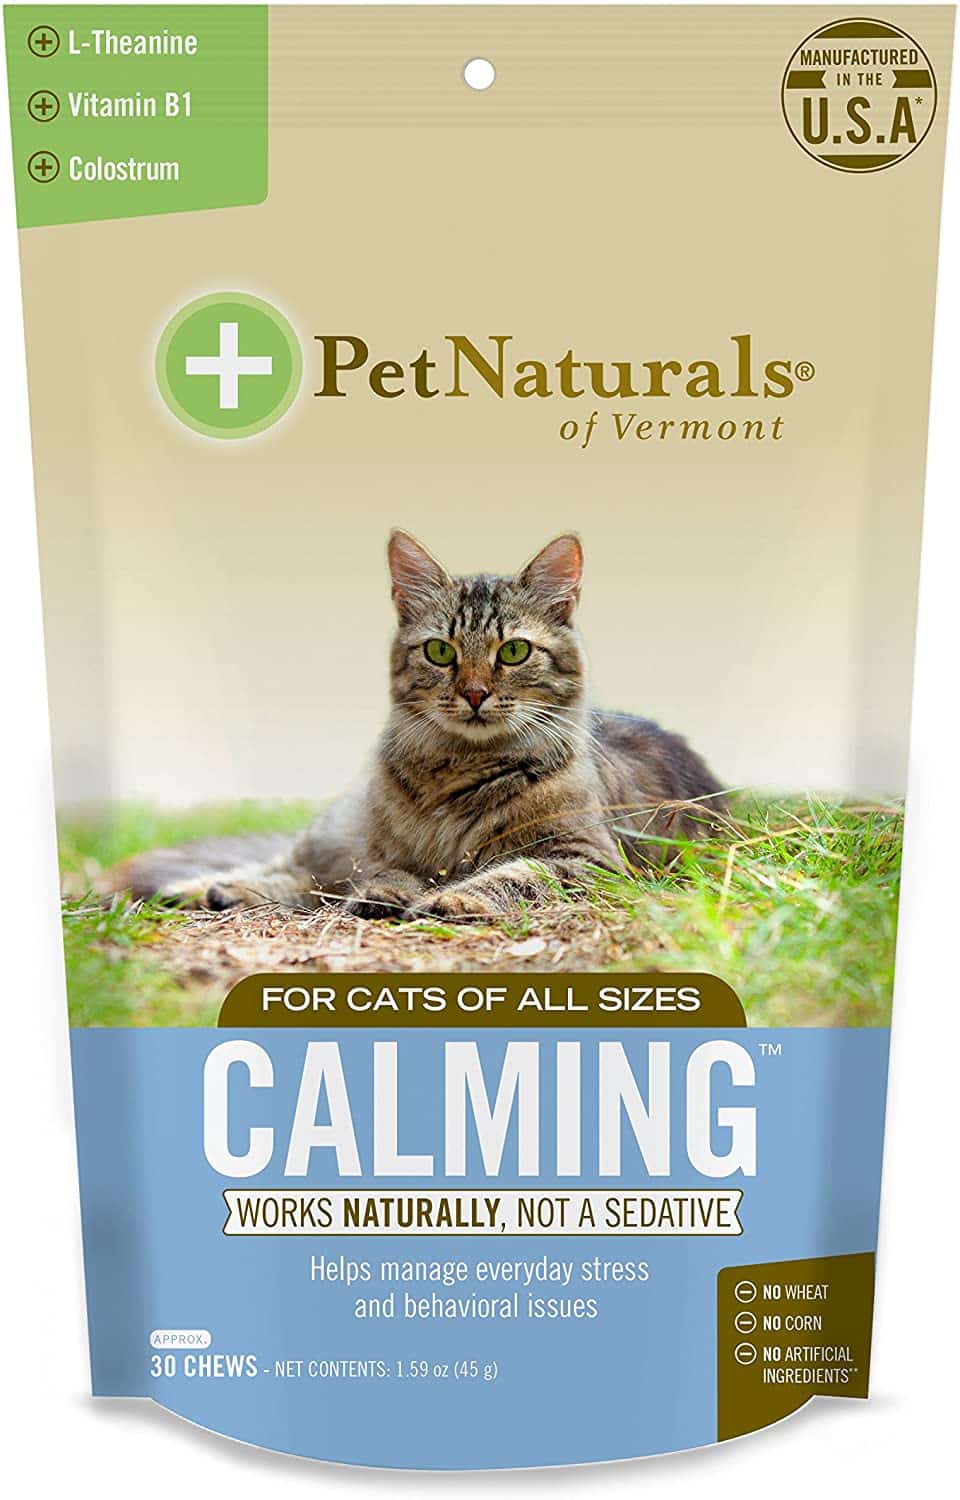 Pet Naturals of Vermont 30 Count $2.59 (REG $8.99)